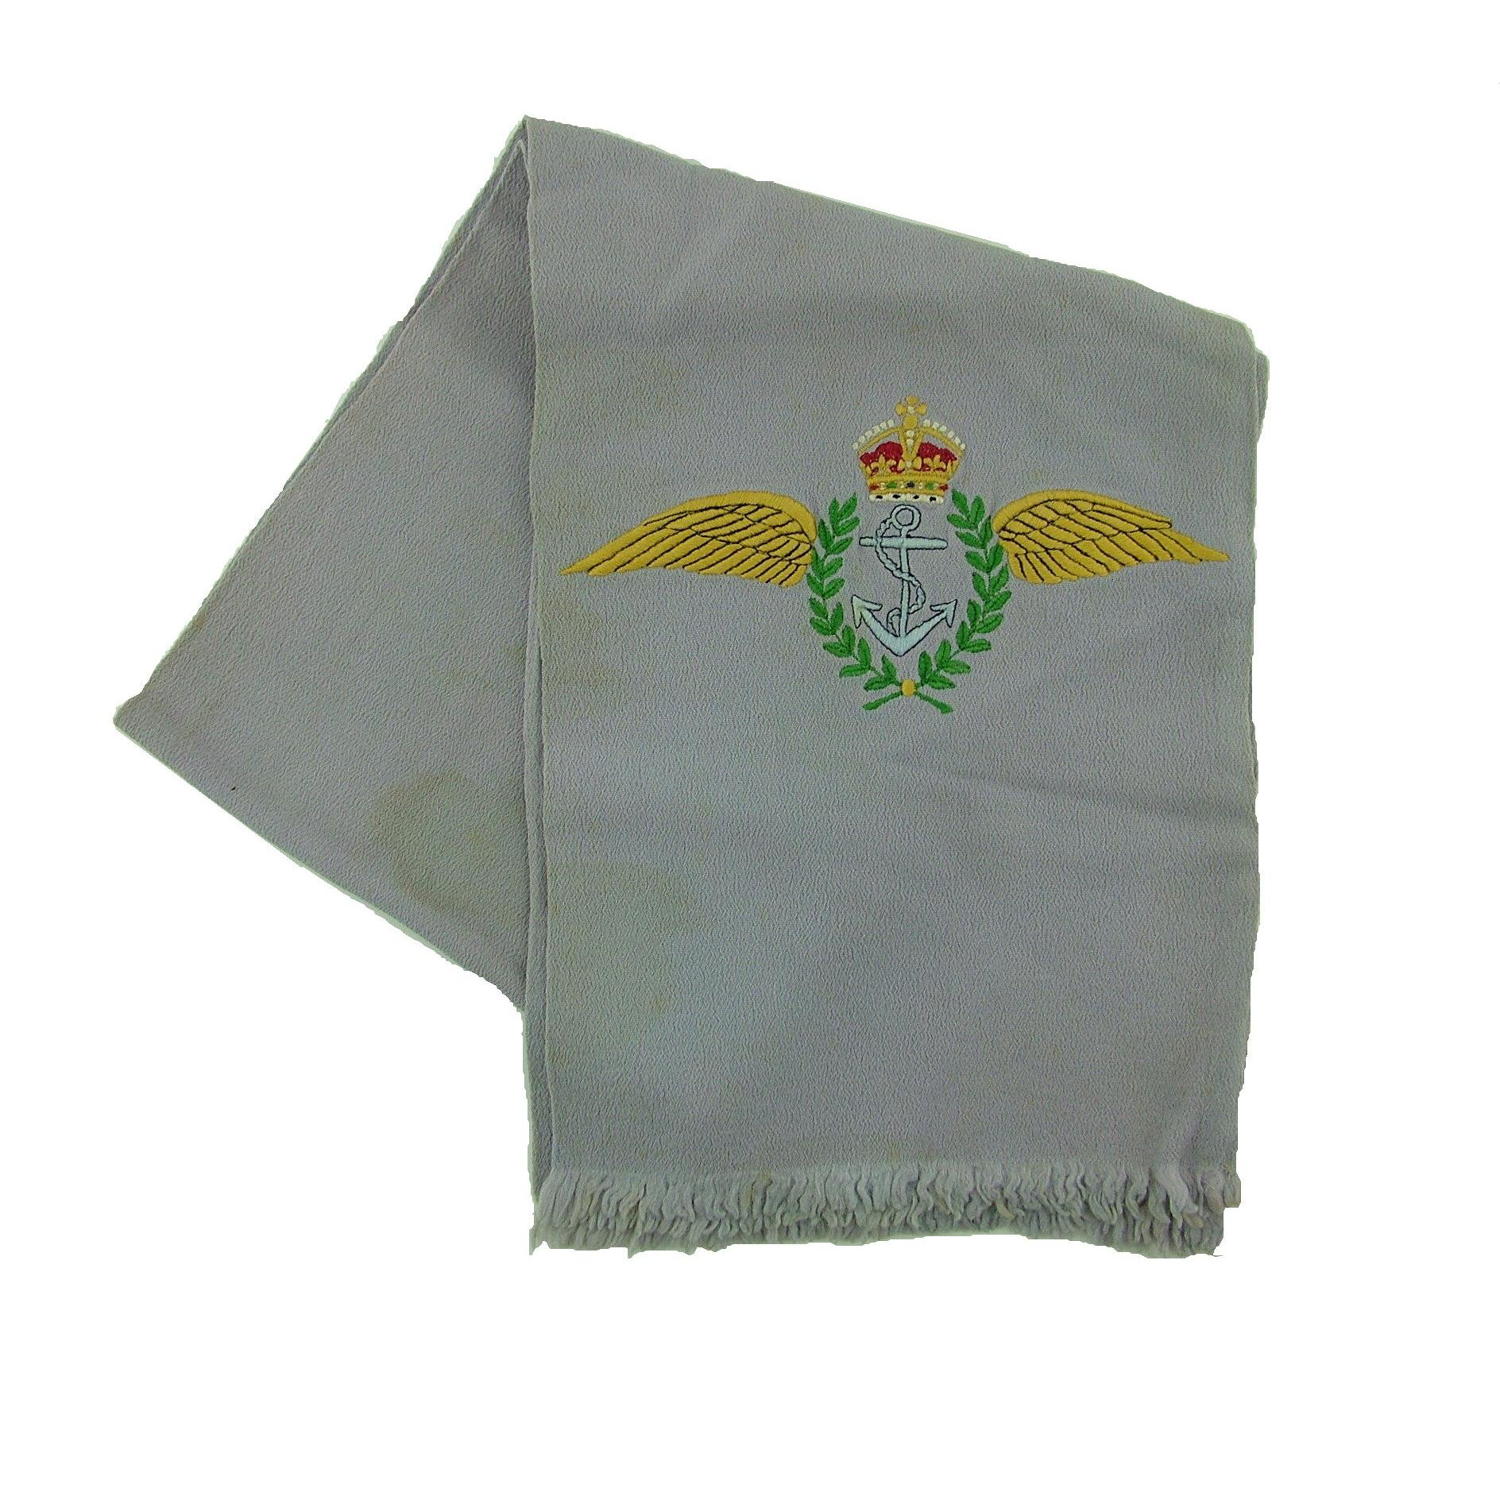 FAA fighter pilot 'type' scarf